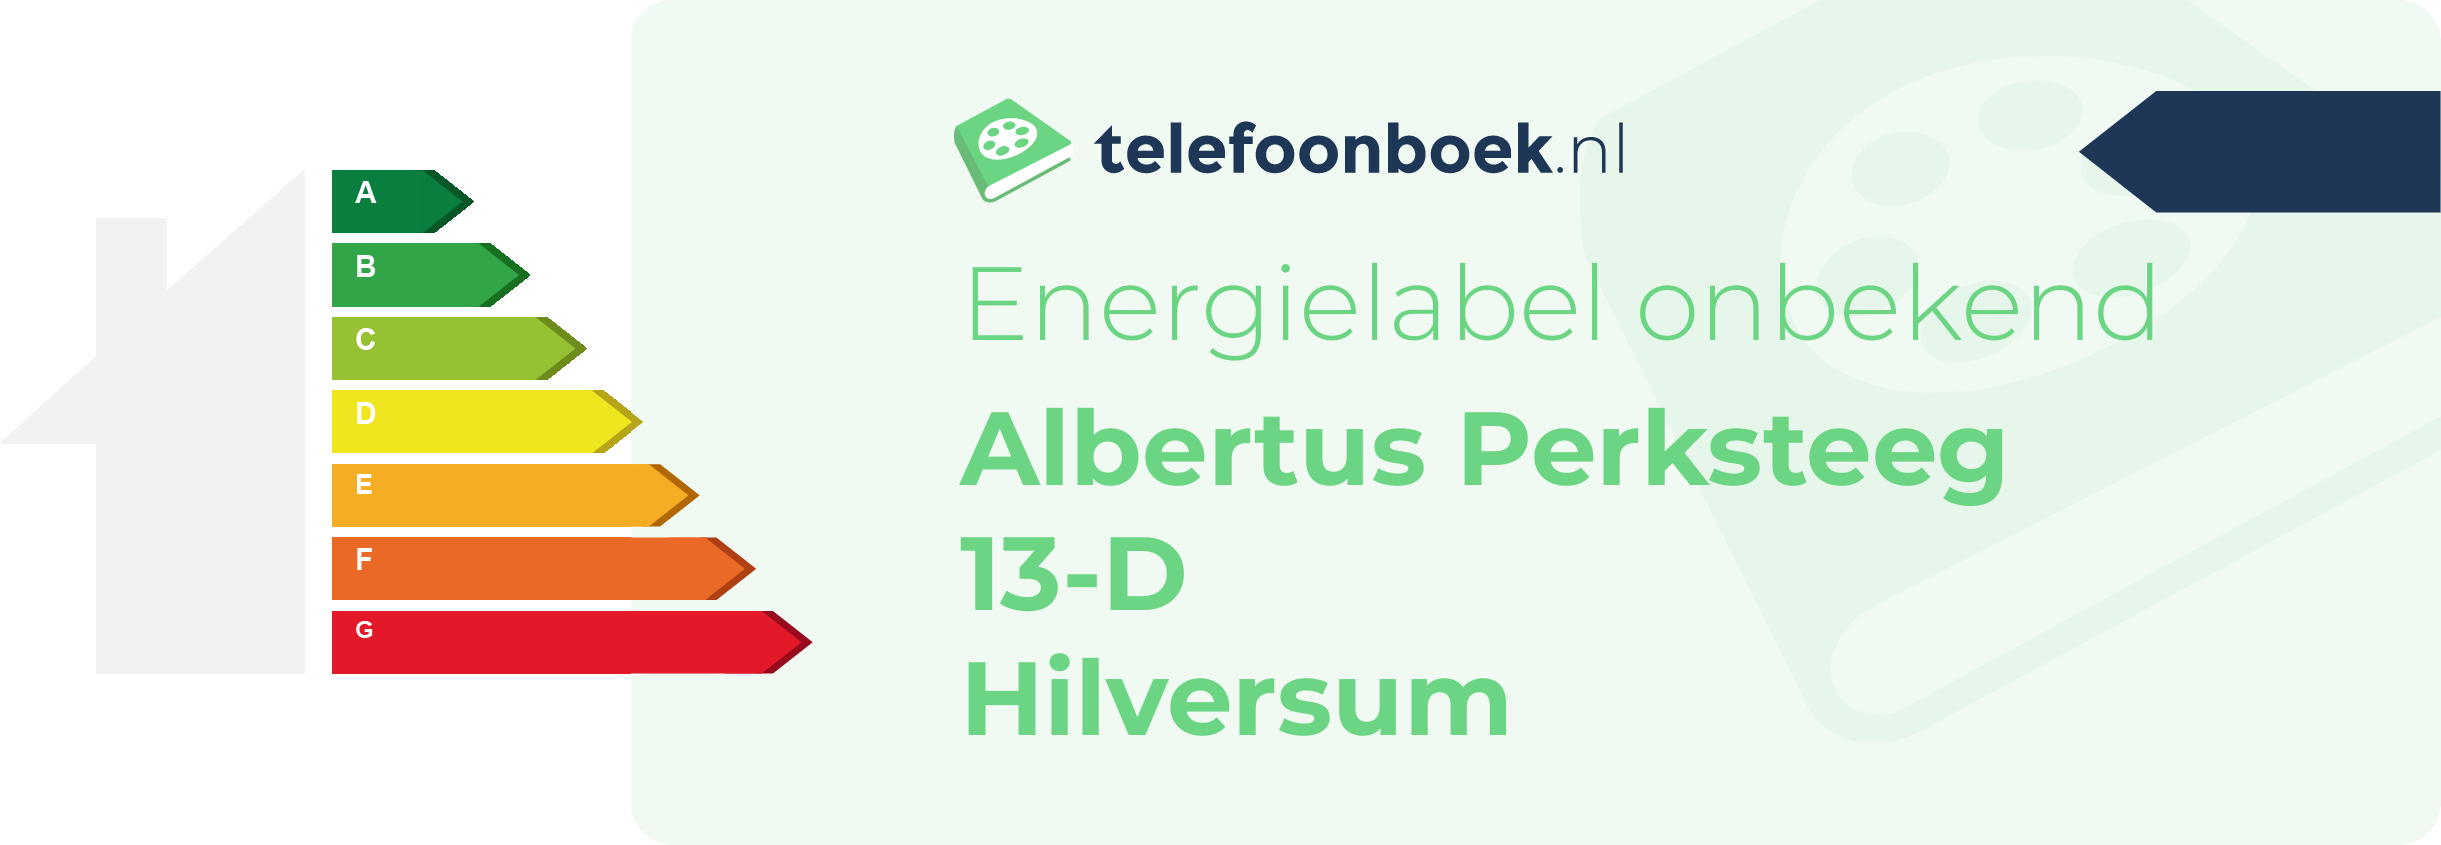 Energielabel Albertus Perksteeg 13-D Hilversum